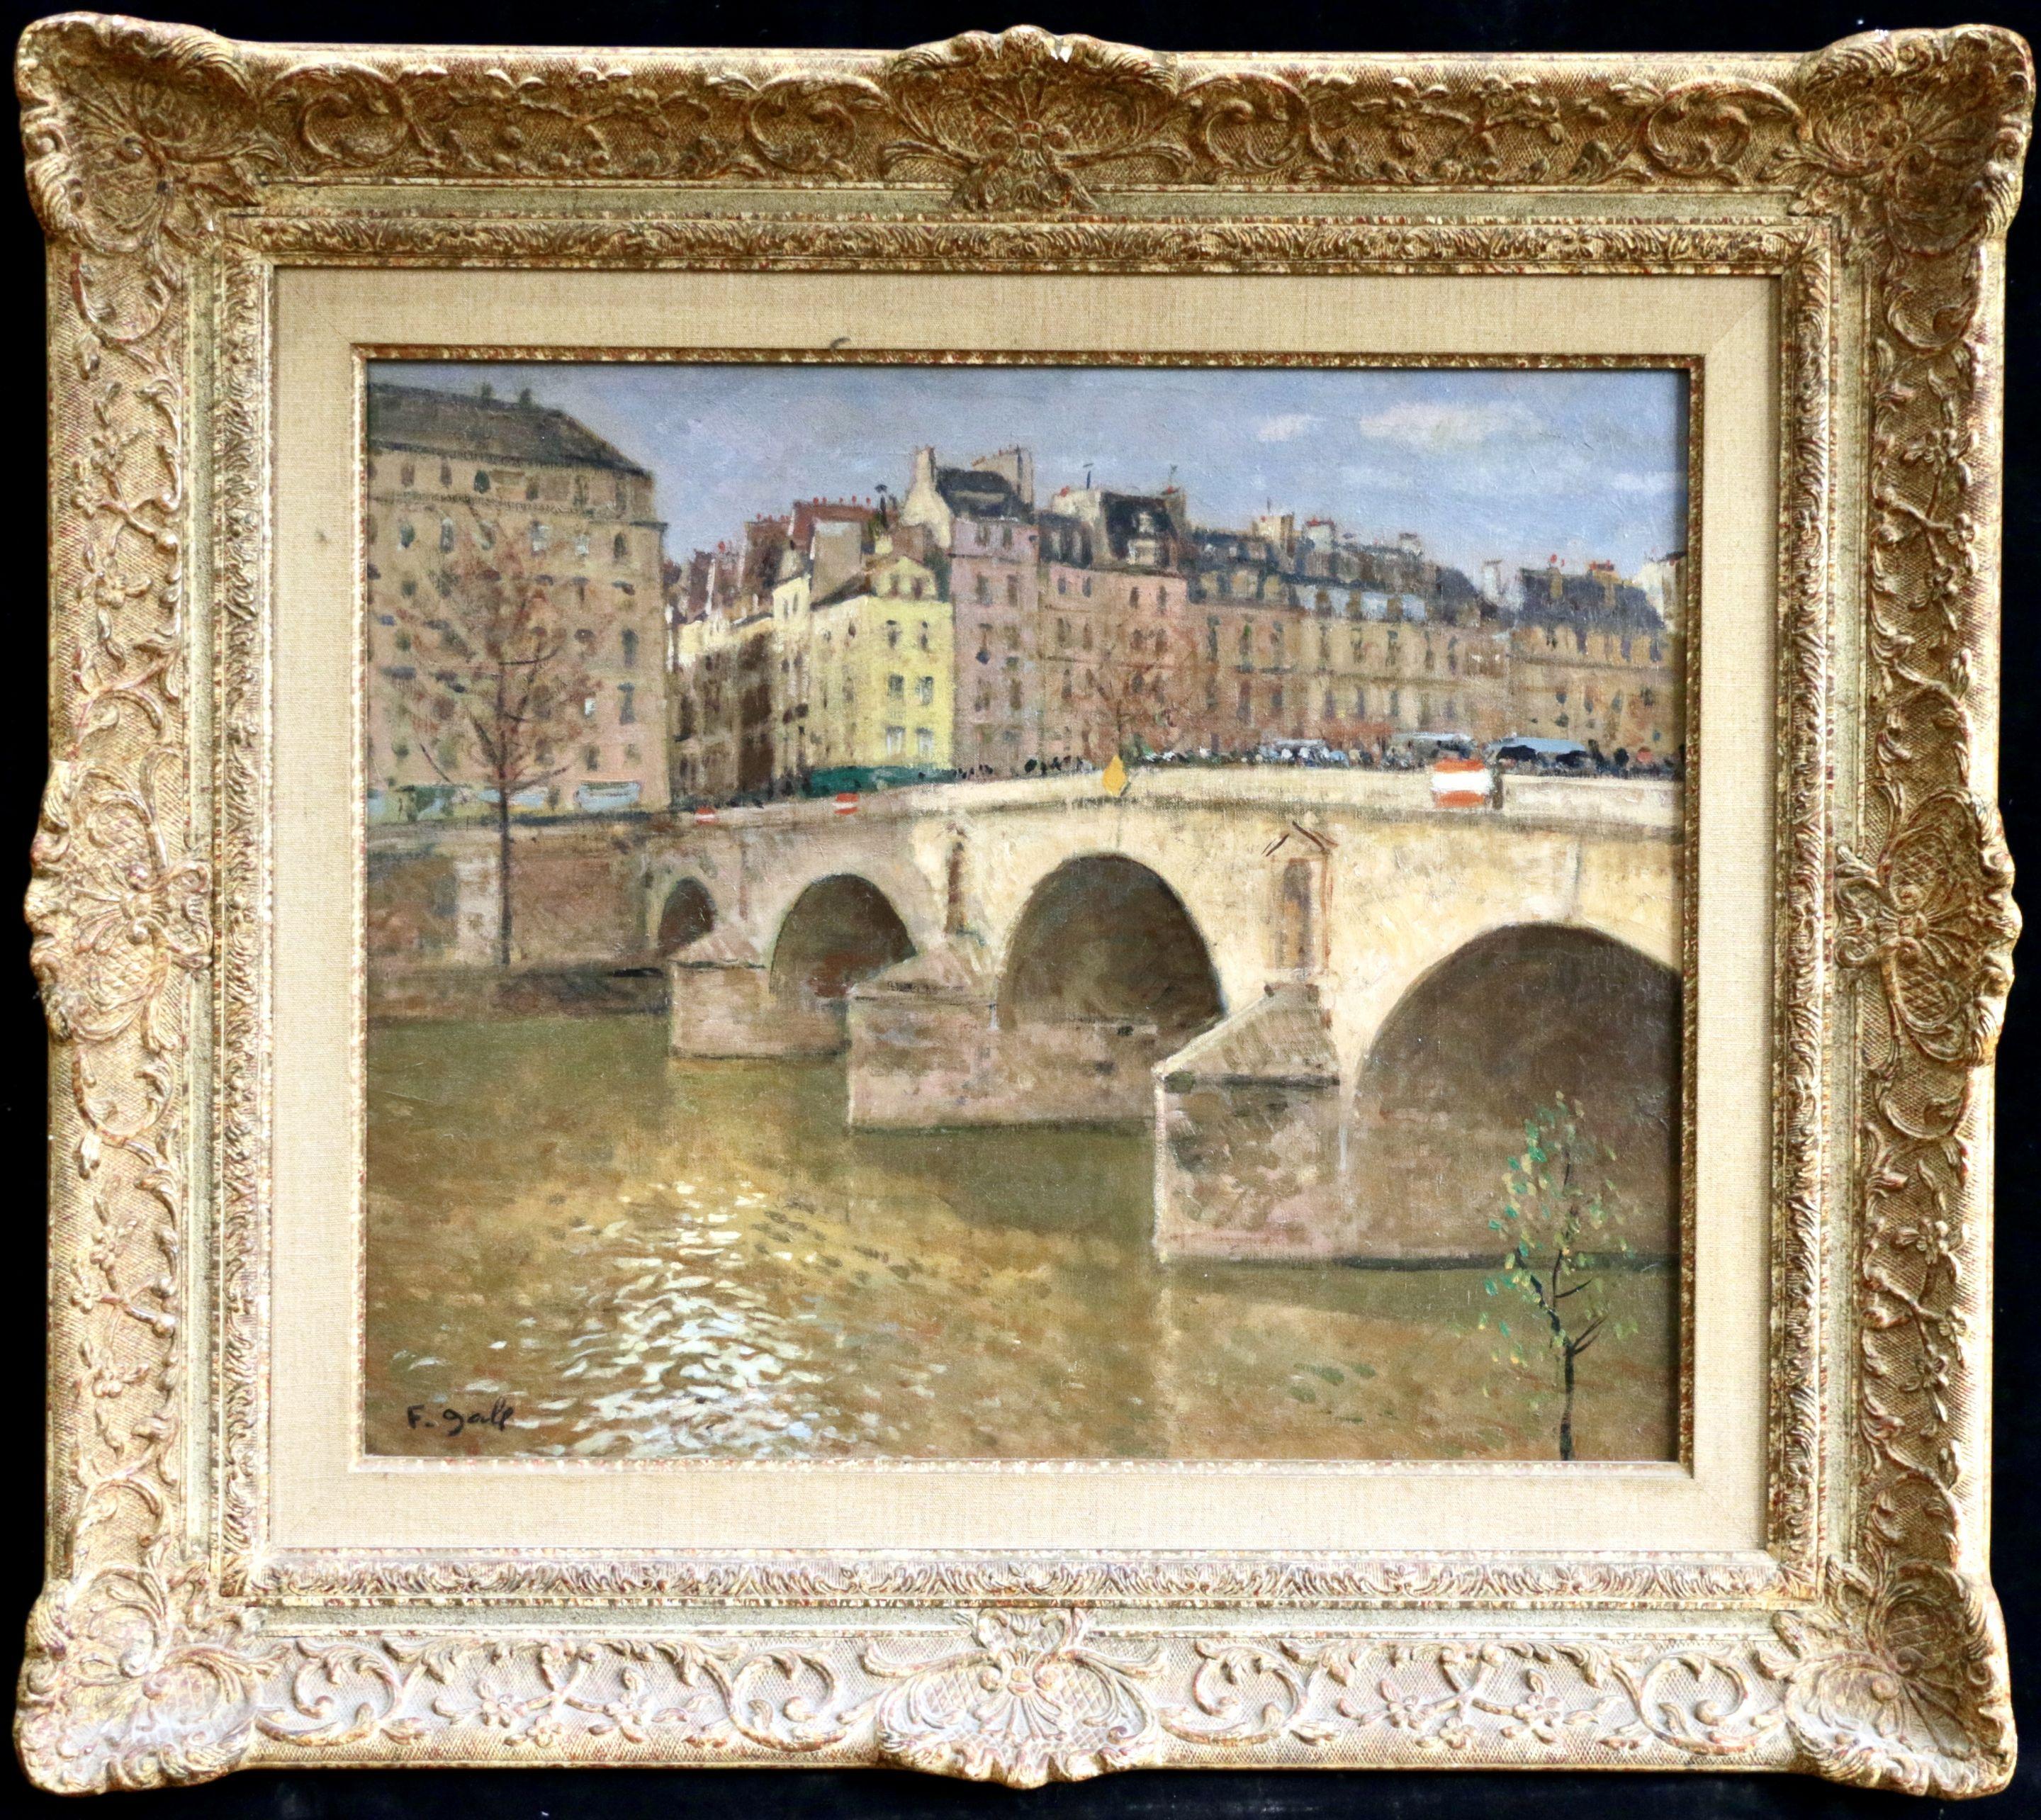 Pont Marie, Paris - Post Impressionist River Landscape Painting by Francois Gall